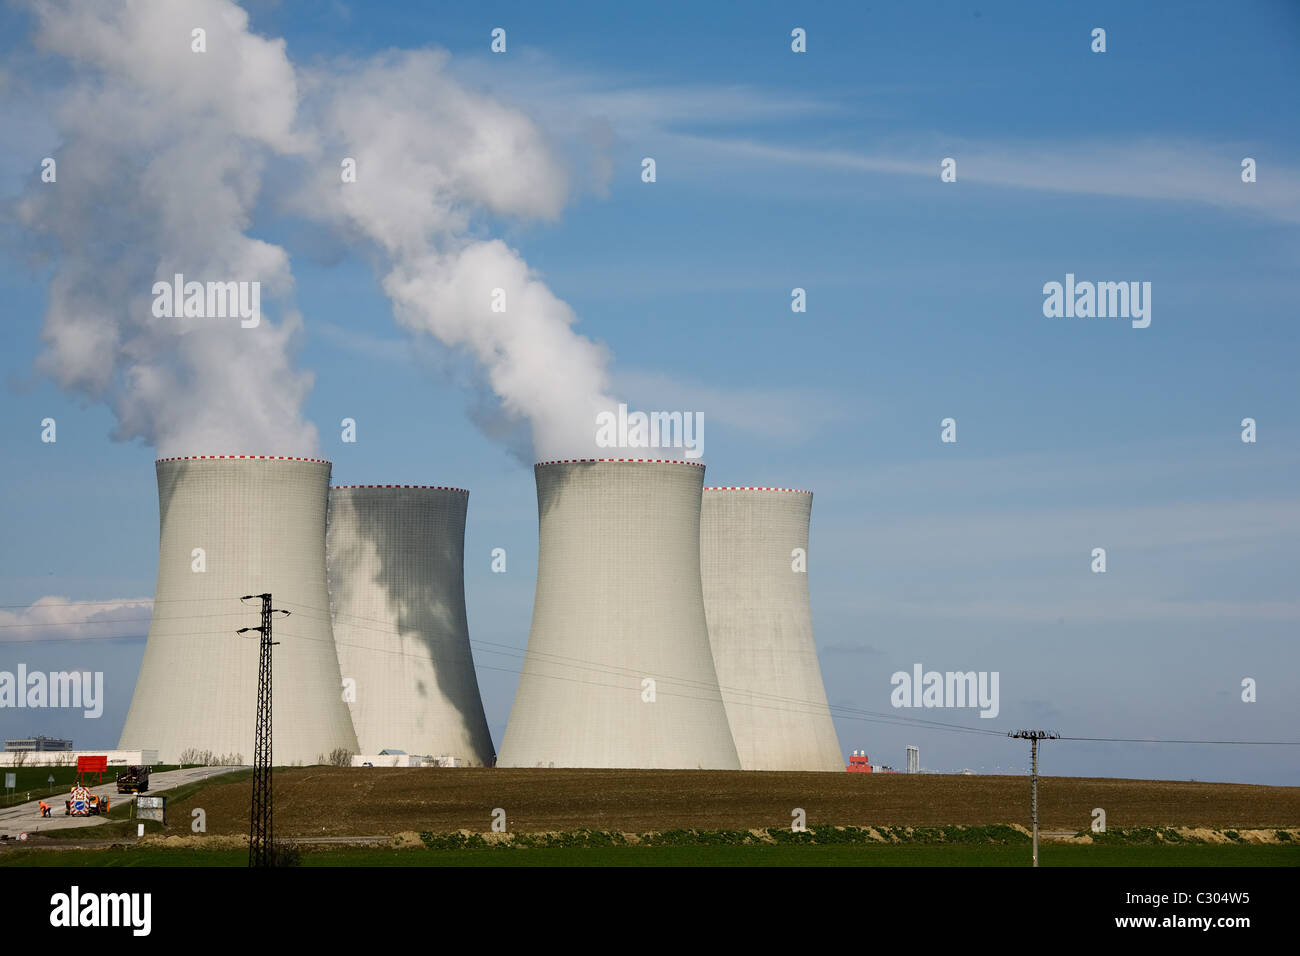 Czech Republic, Temelin nuclear power plant Stock Photo